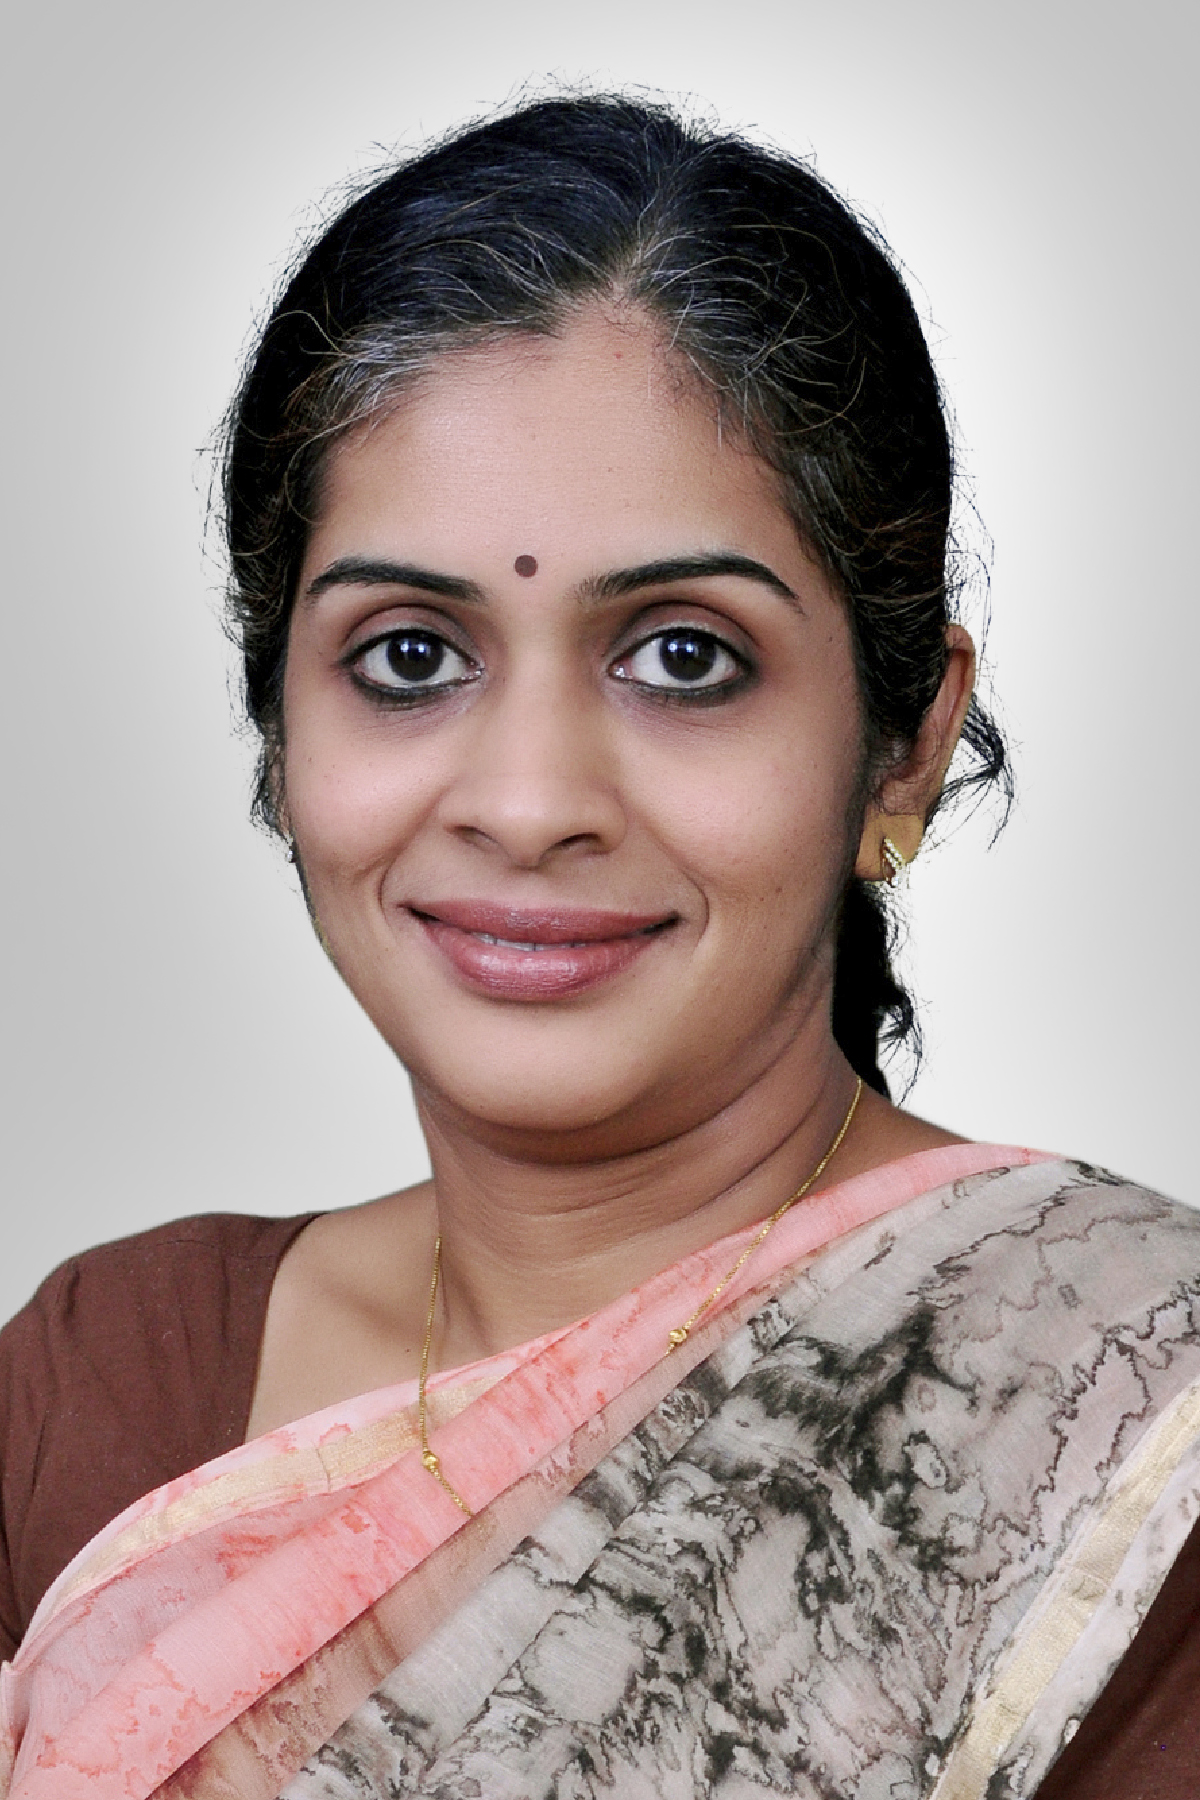 Ms. Drishya K Reghuvaran